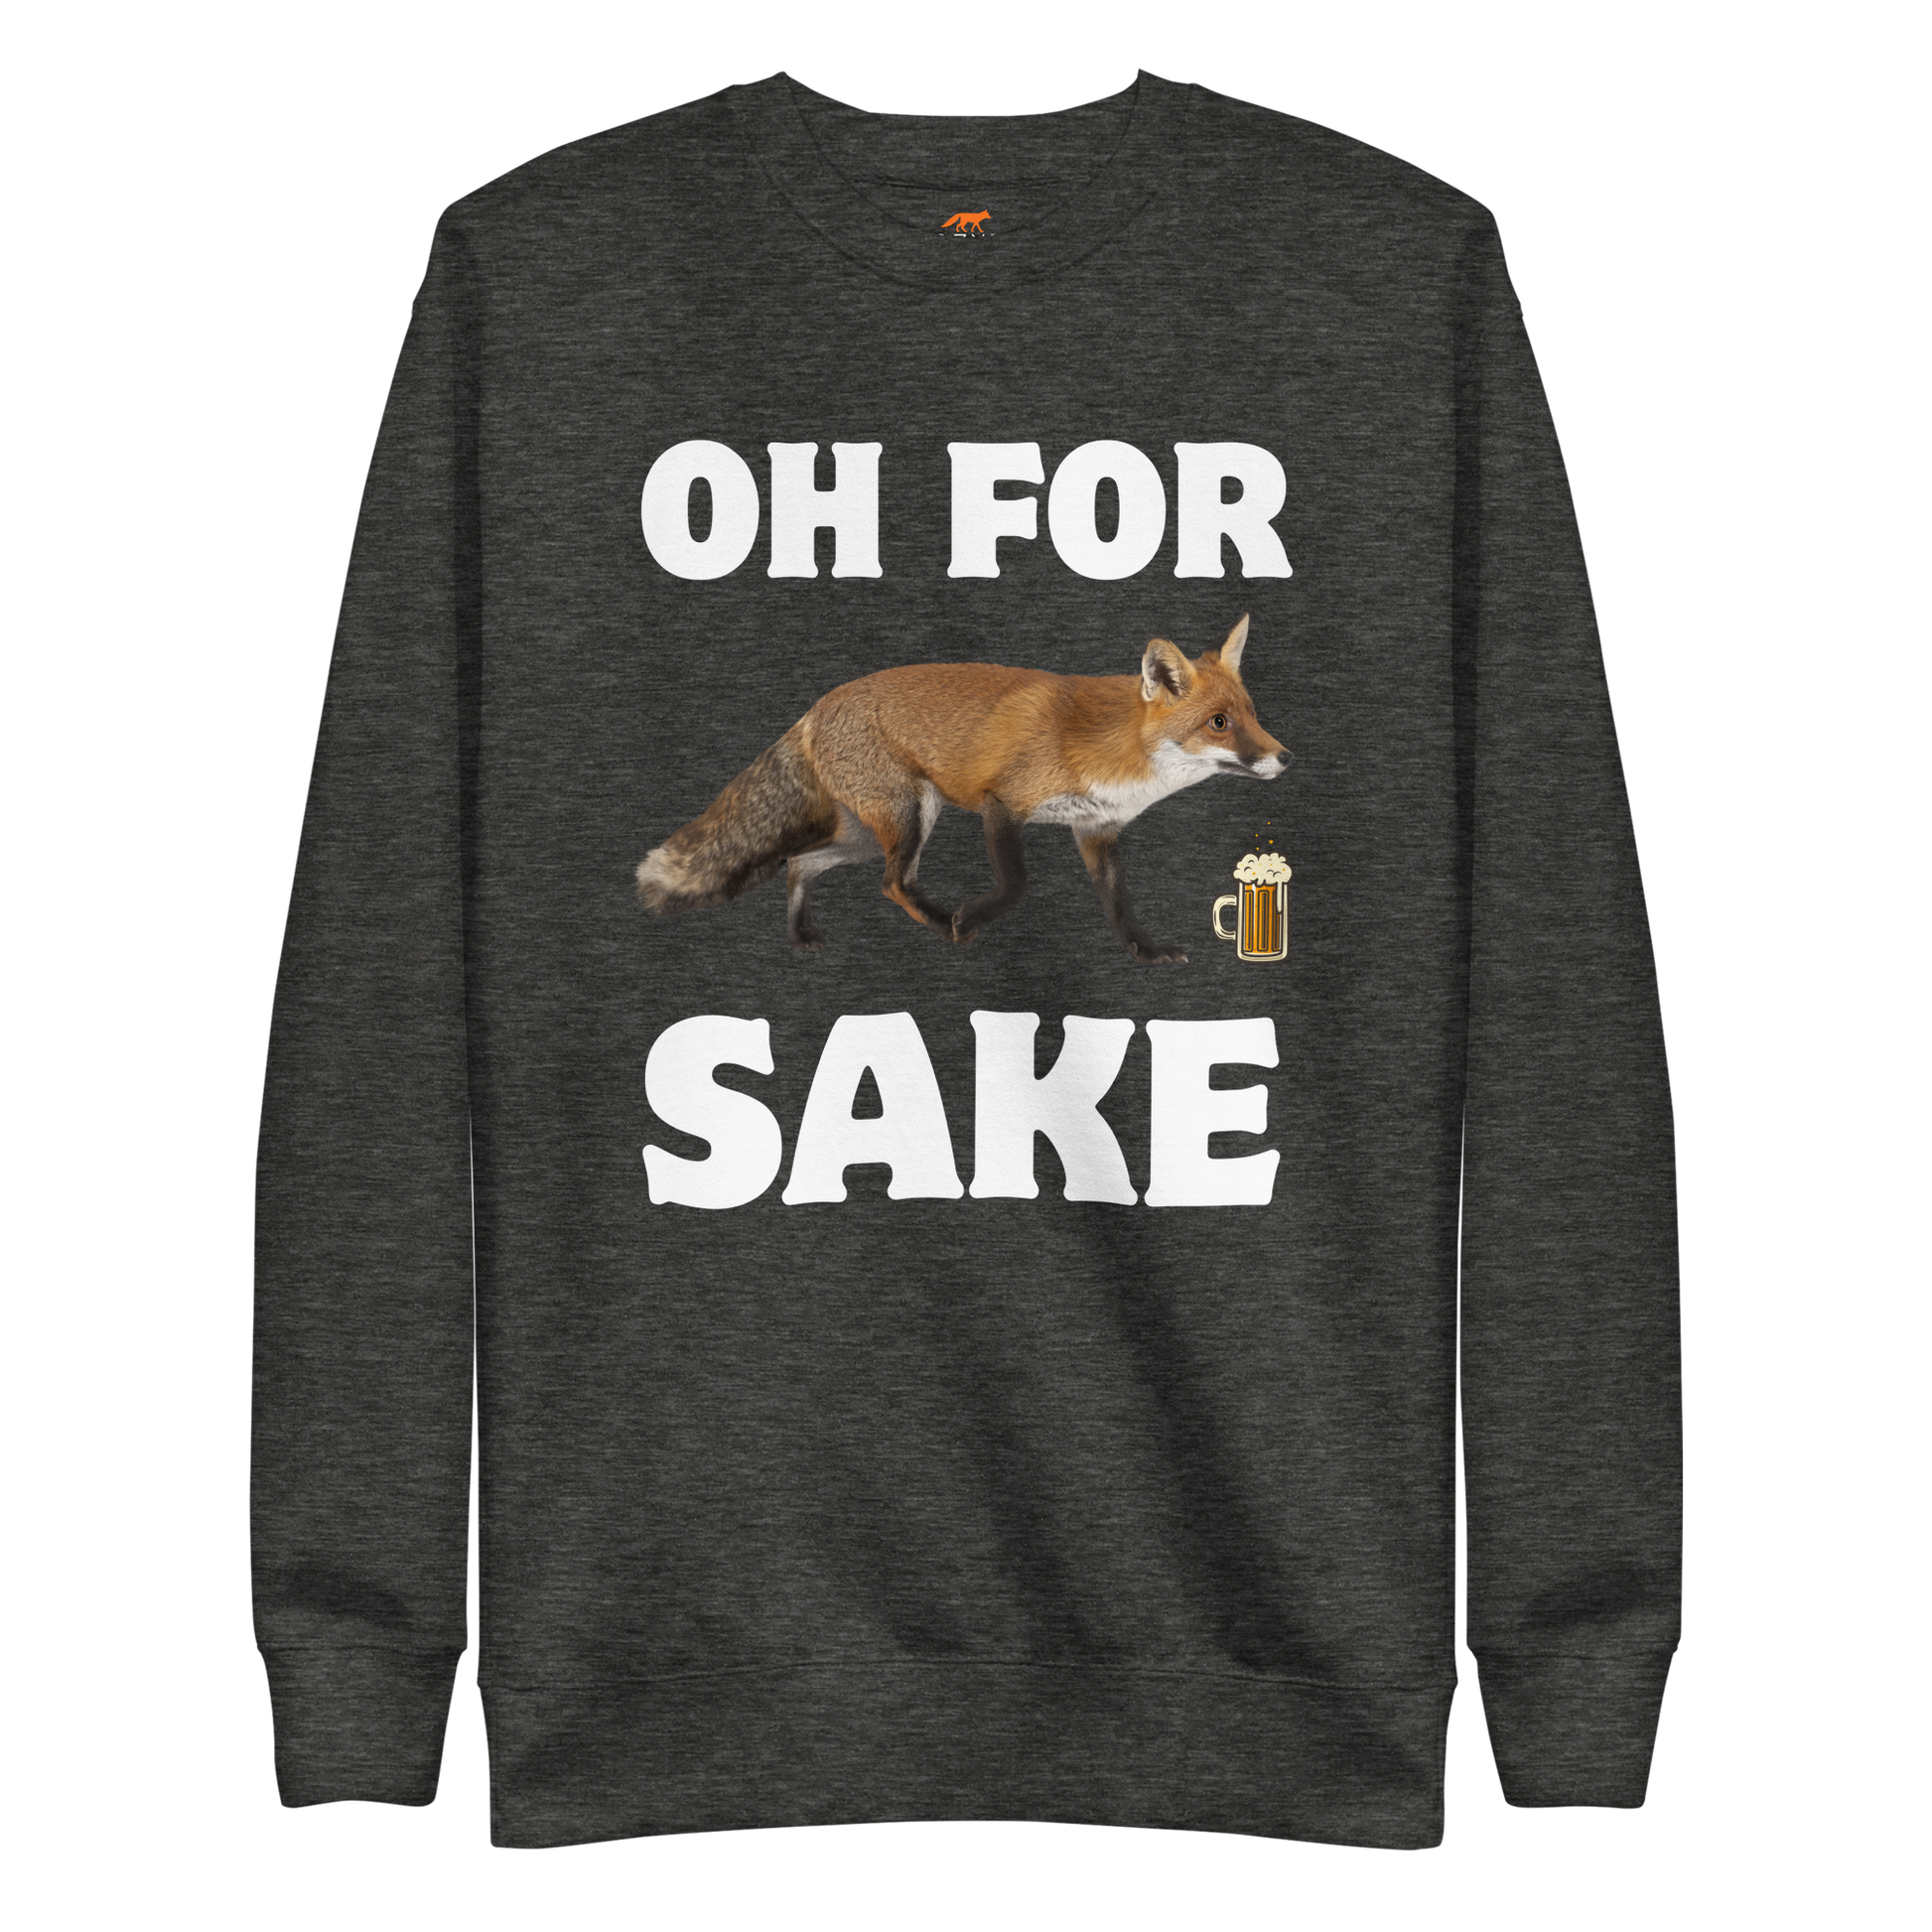 Charcoal Heather Premium Fox Sweatshirt featuring a Oh For Fox Sake graphic on the chest - Funny Graphic Fox Sweatshirts - Boozy Fox